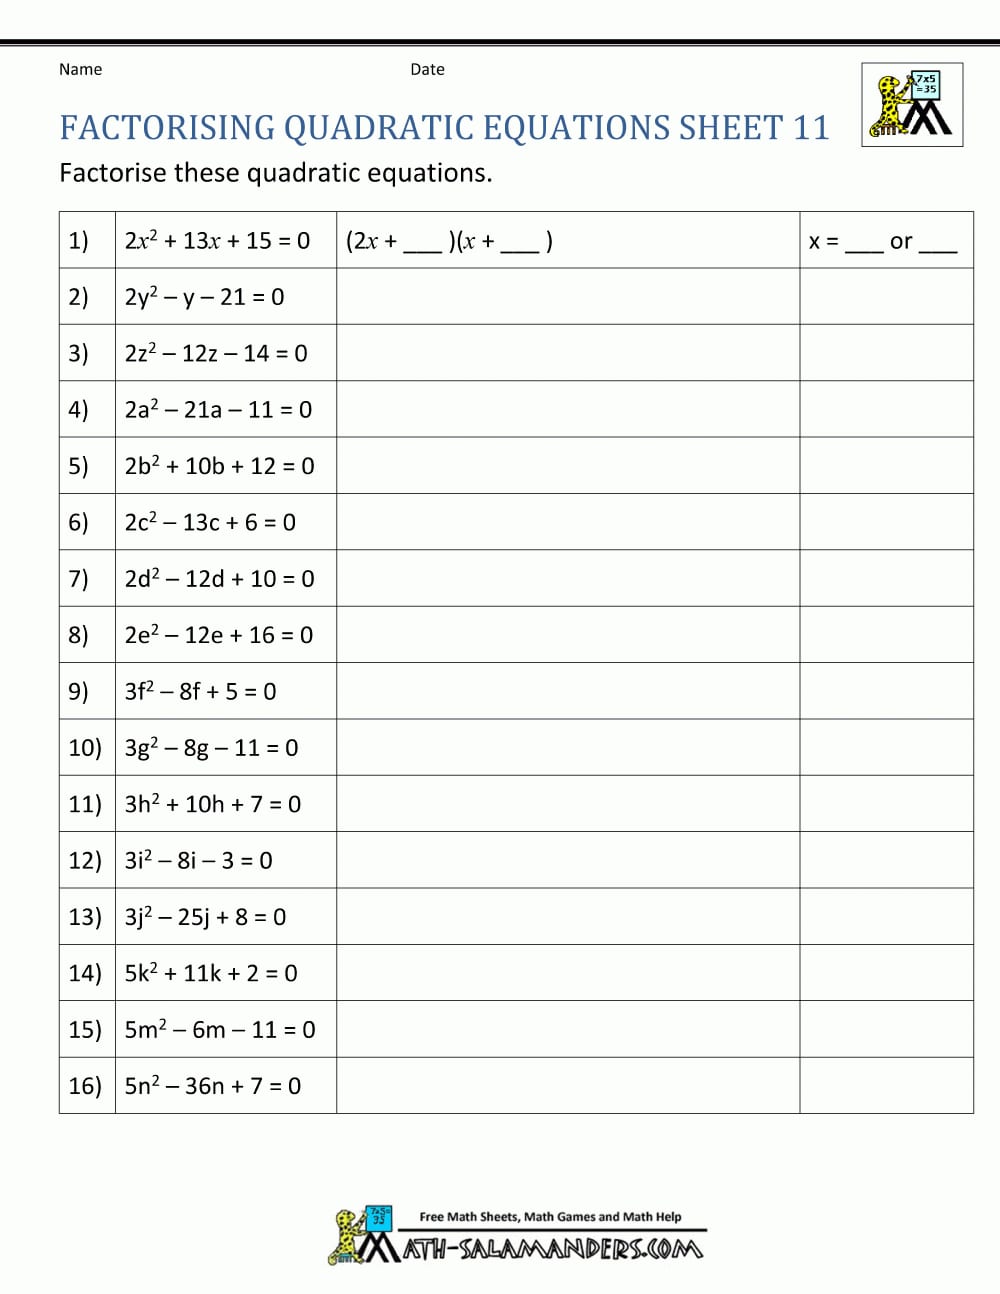 Factoring Quadratic Equations Intended For Solving Using The Quadratic Formula Worksheet Answer Key